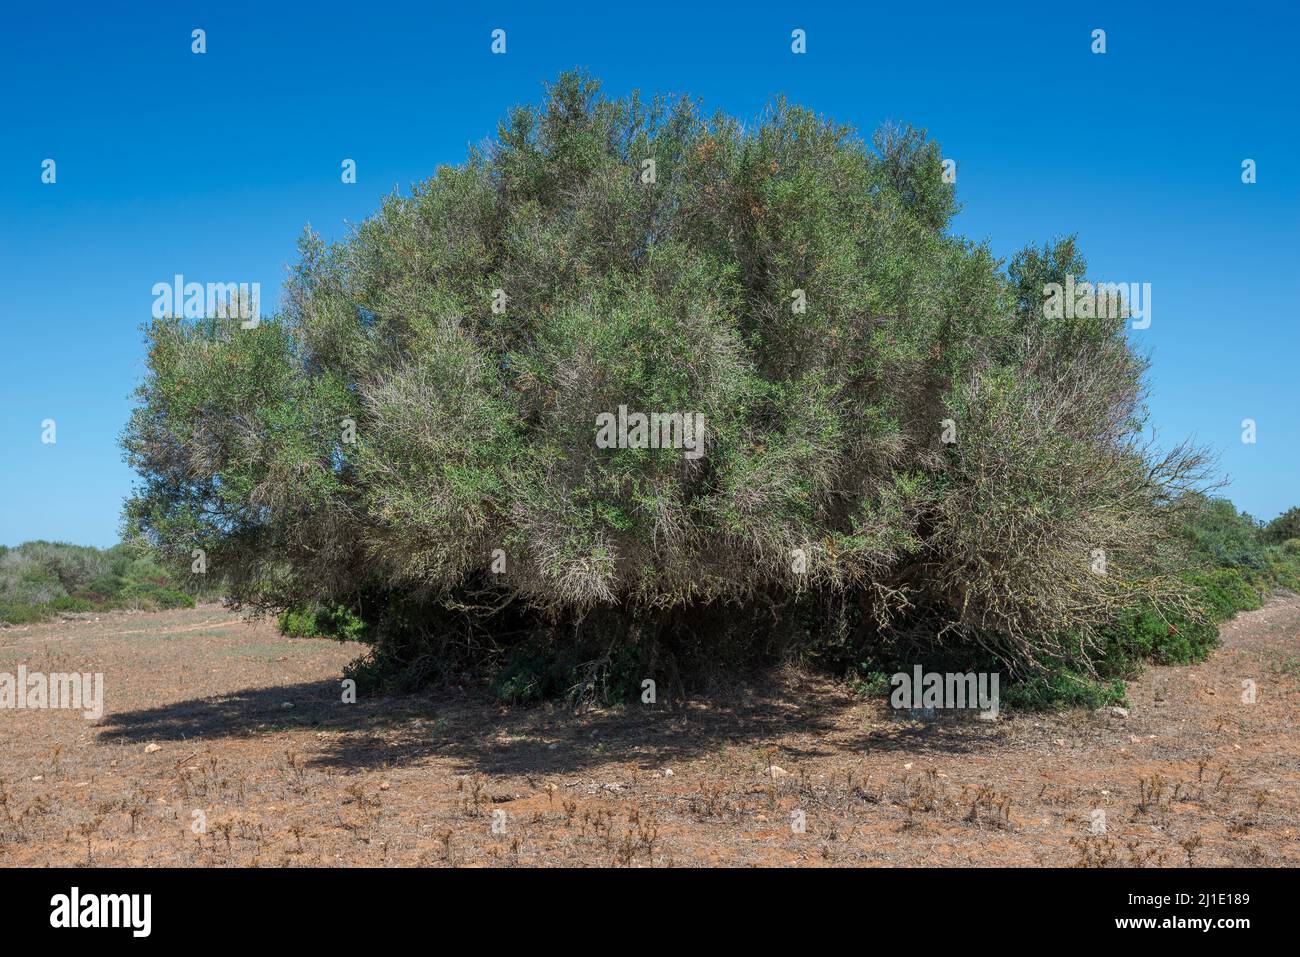 Wild olive tree, Olea europaea var. sylvestris. Photo taken in the municipality of Ciutadella de Menorca, Balearic Islands, Spain Stock Photo